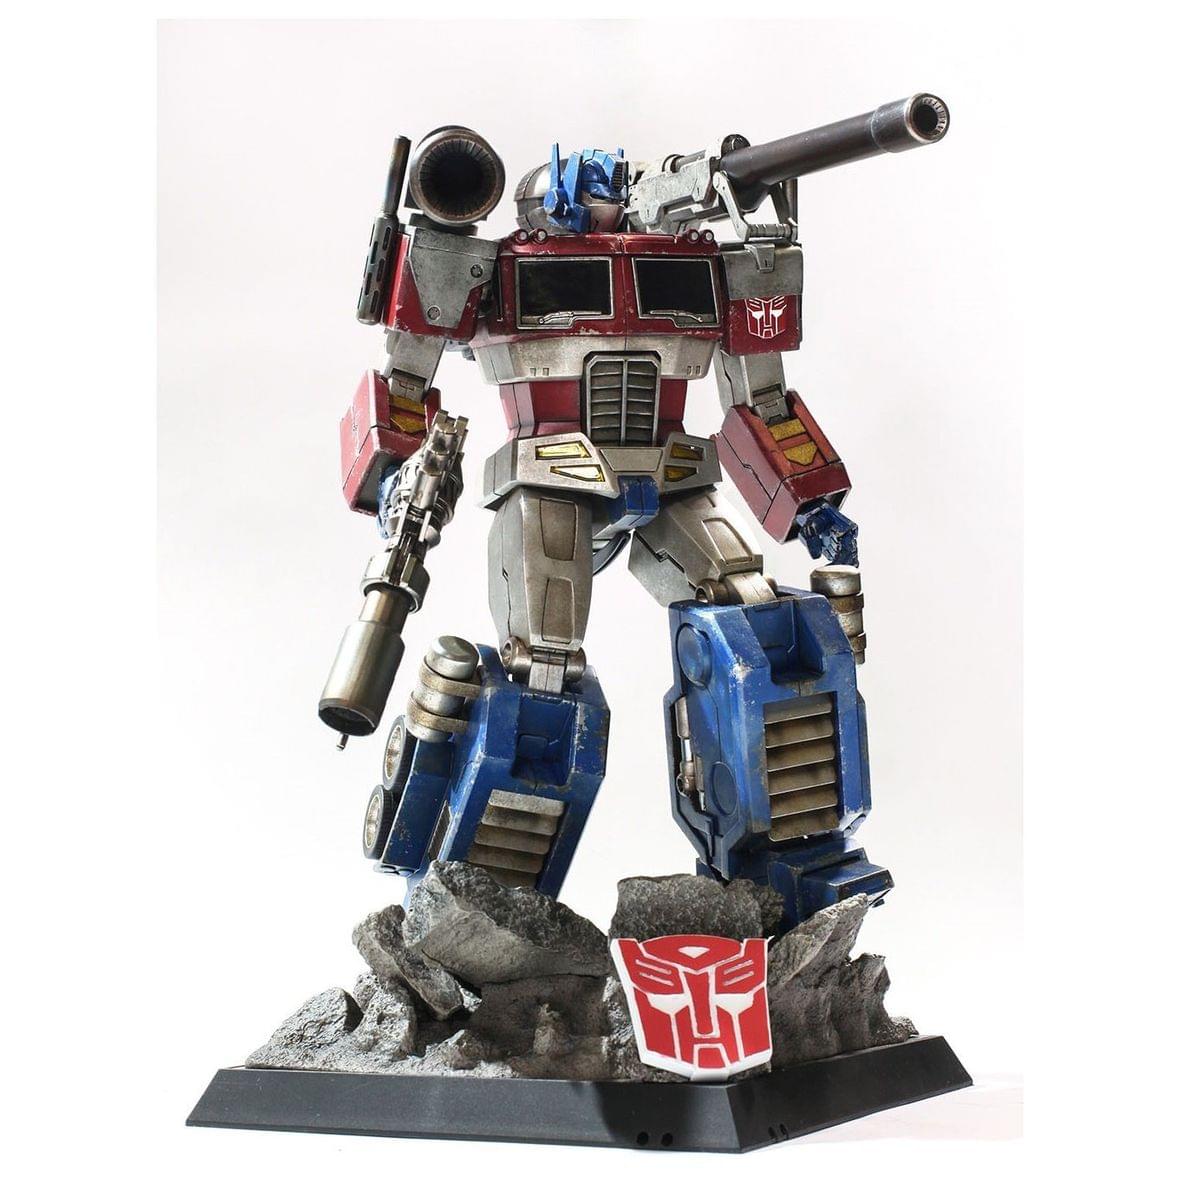 Transformers Hot Toys Collectible Figure: Optimus Prime (Megatron Version)